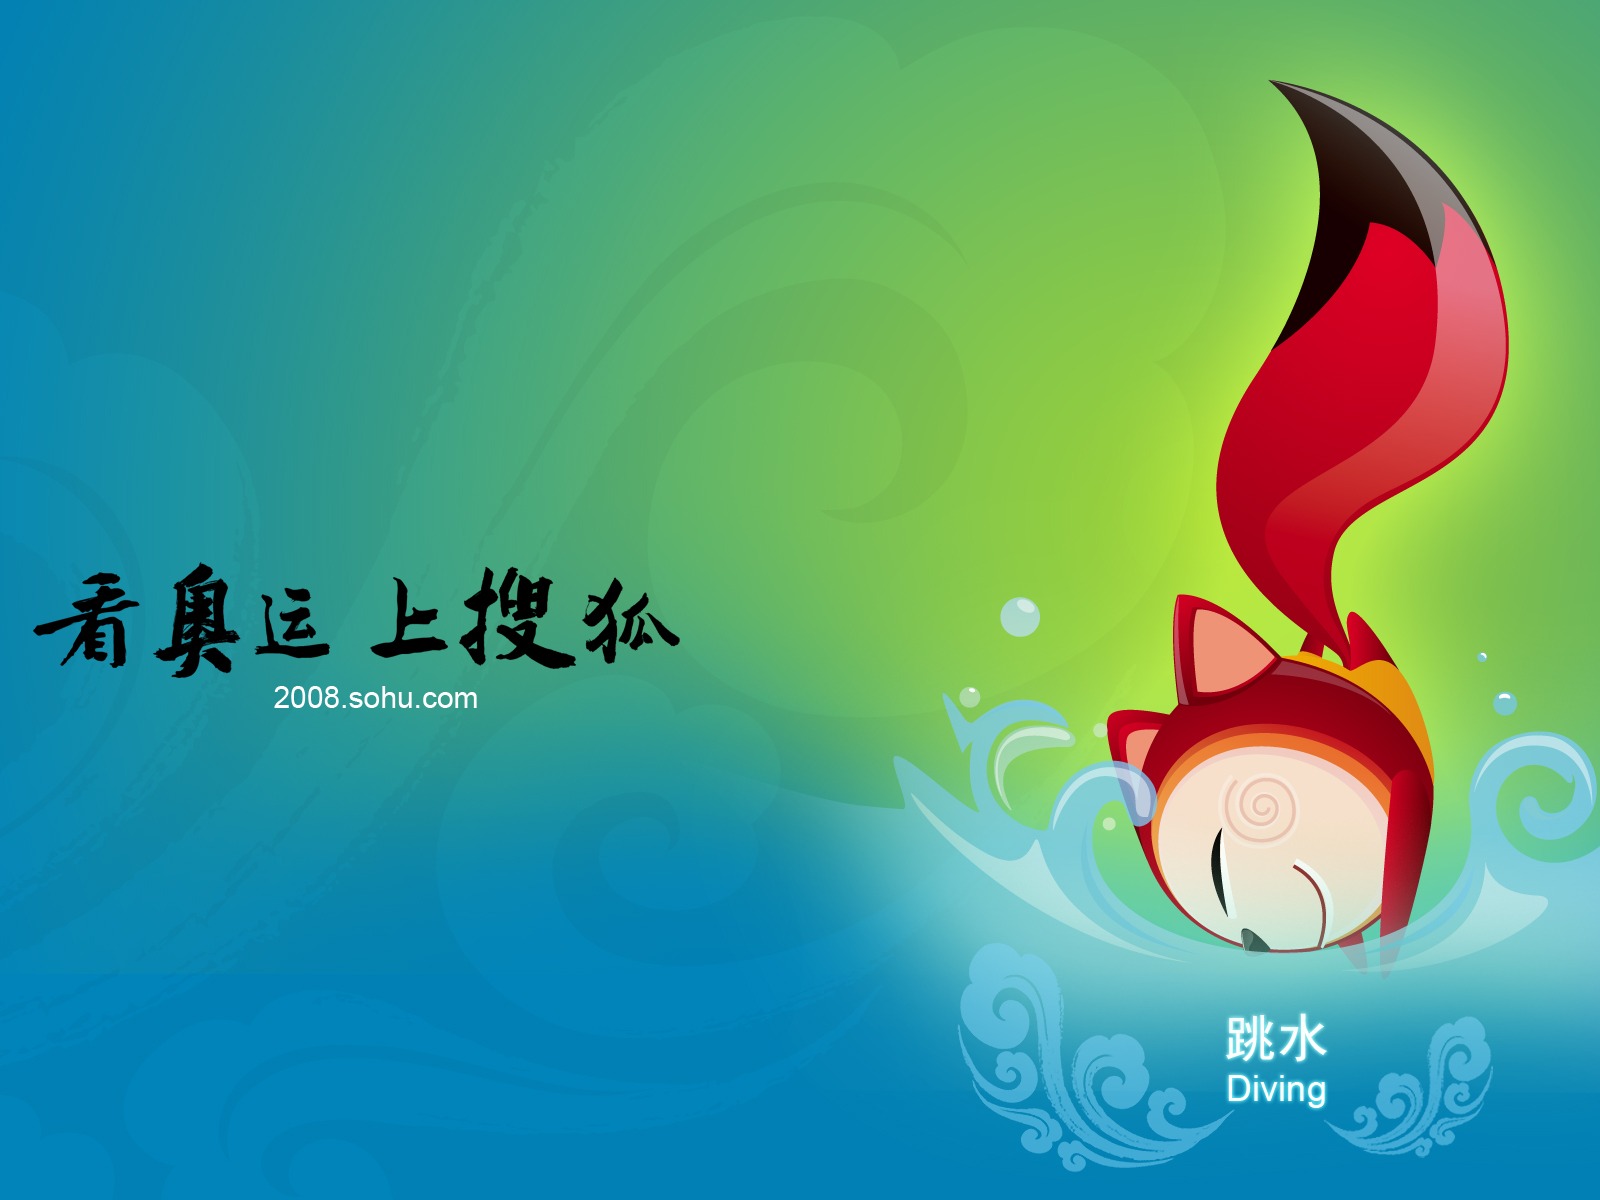 Sohu Olympic sports style wallpaper #20 - 1600x1200